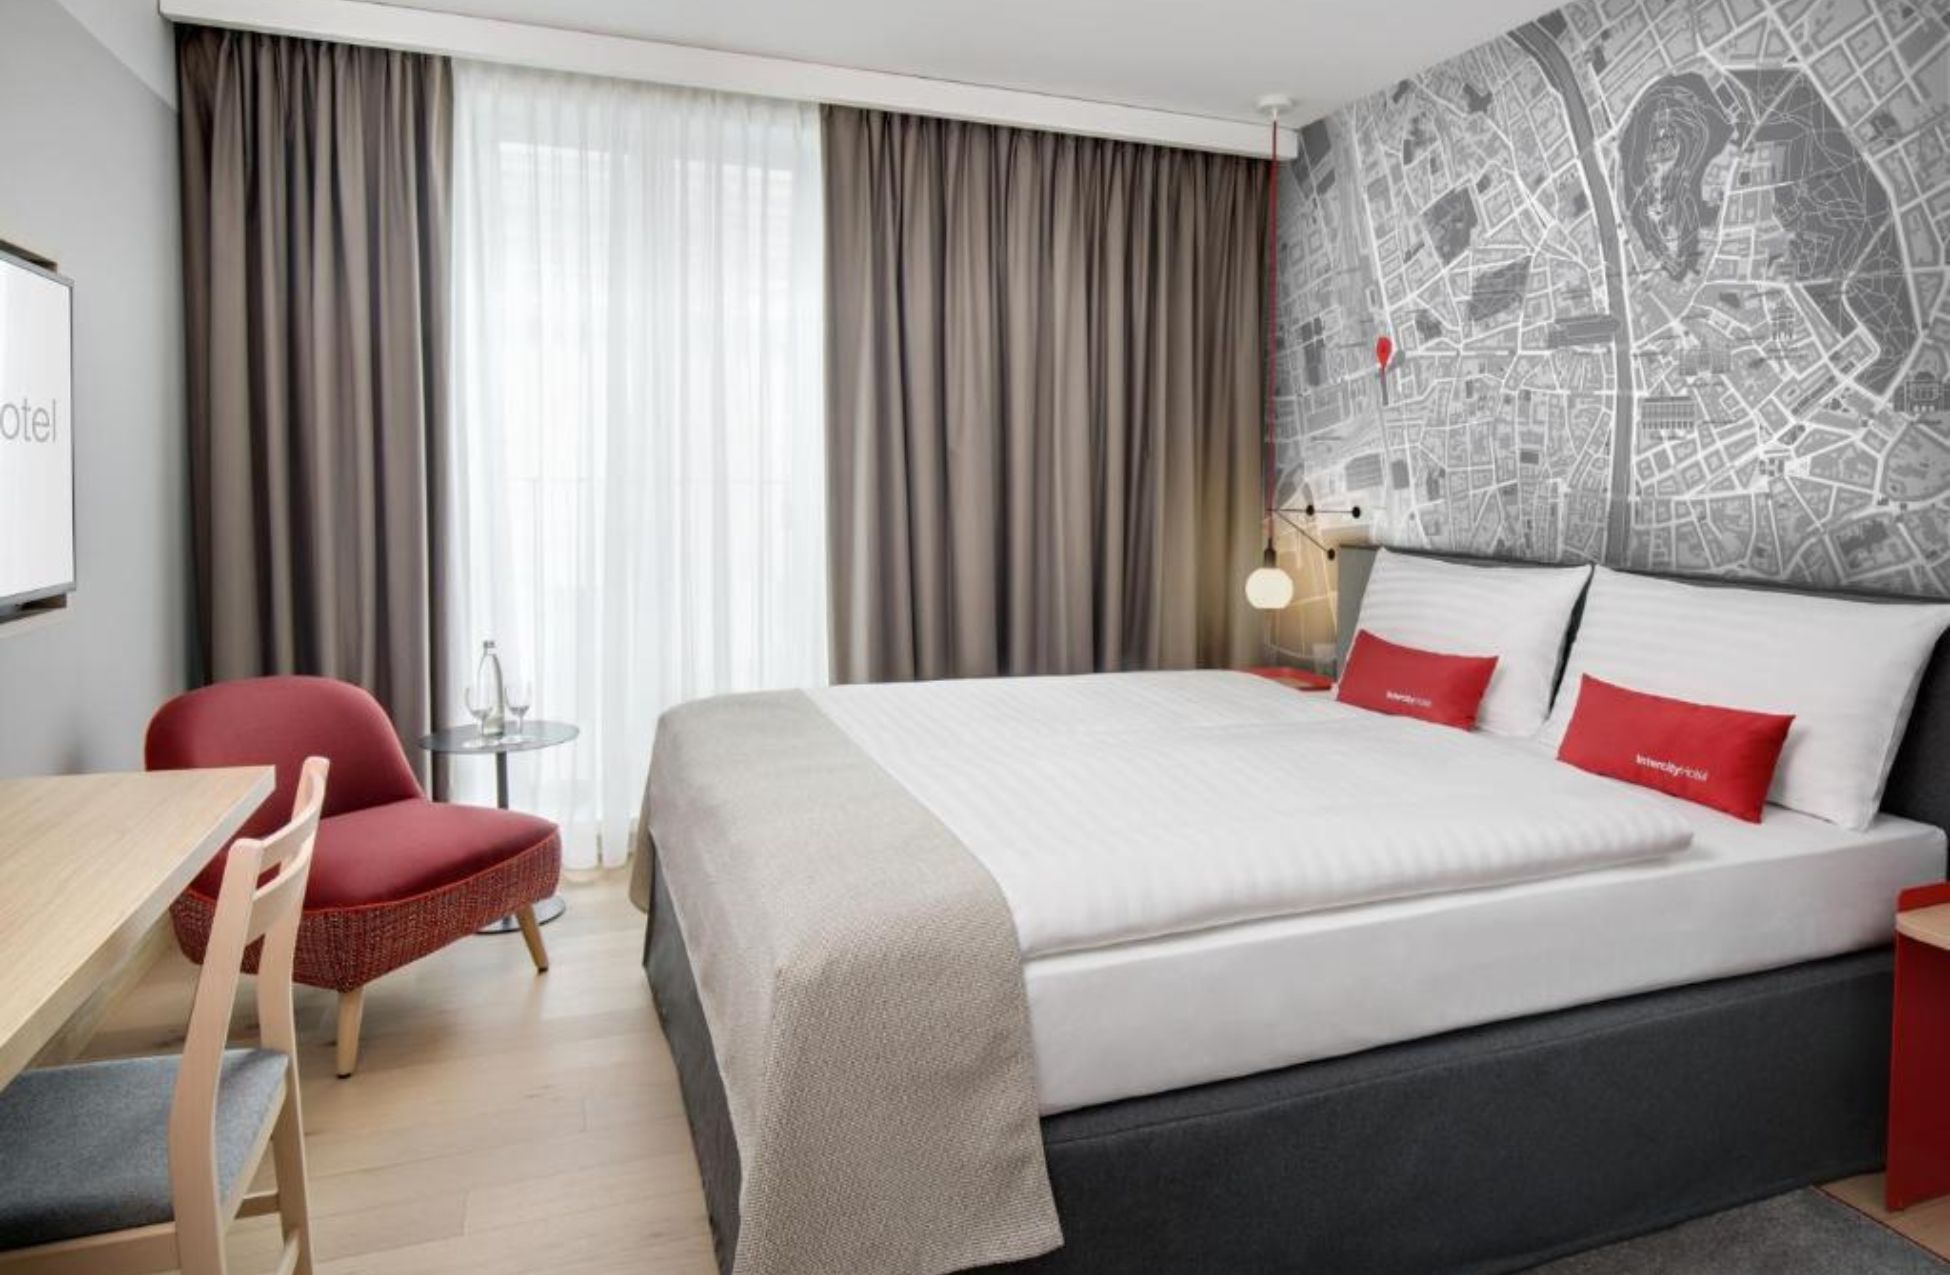 IntercityHotel Graz - Best Hotels In Graz